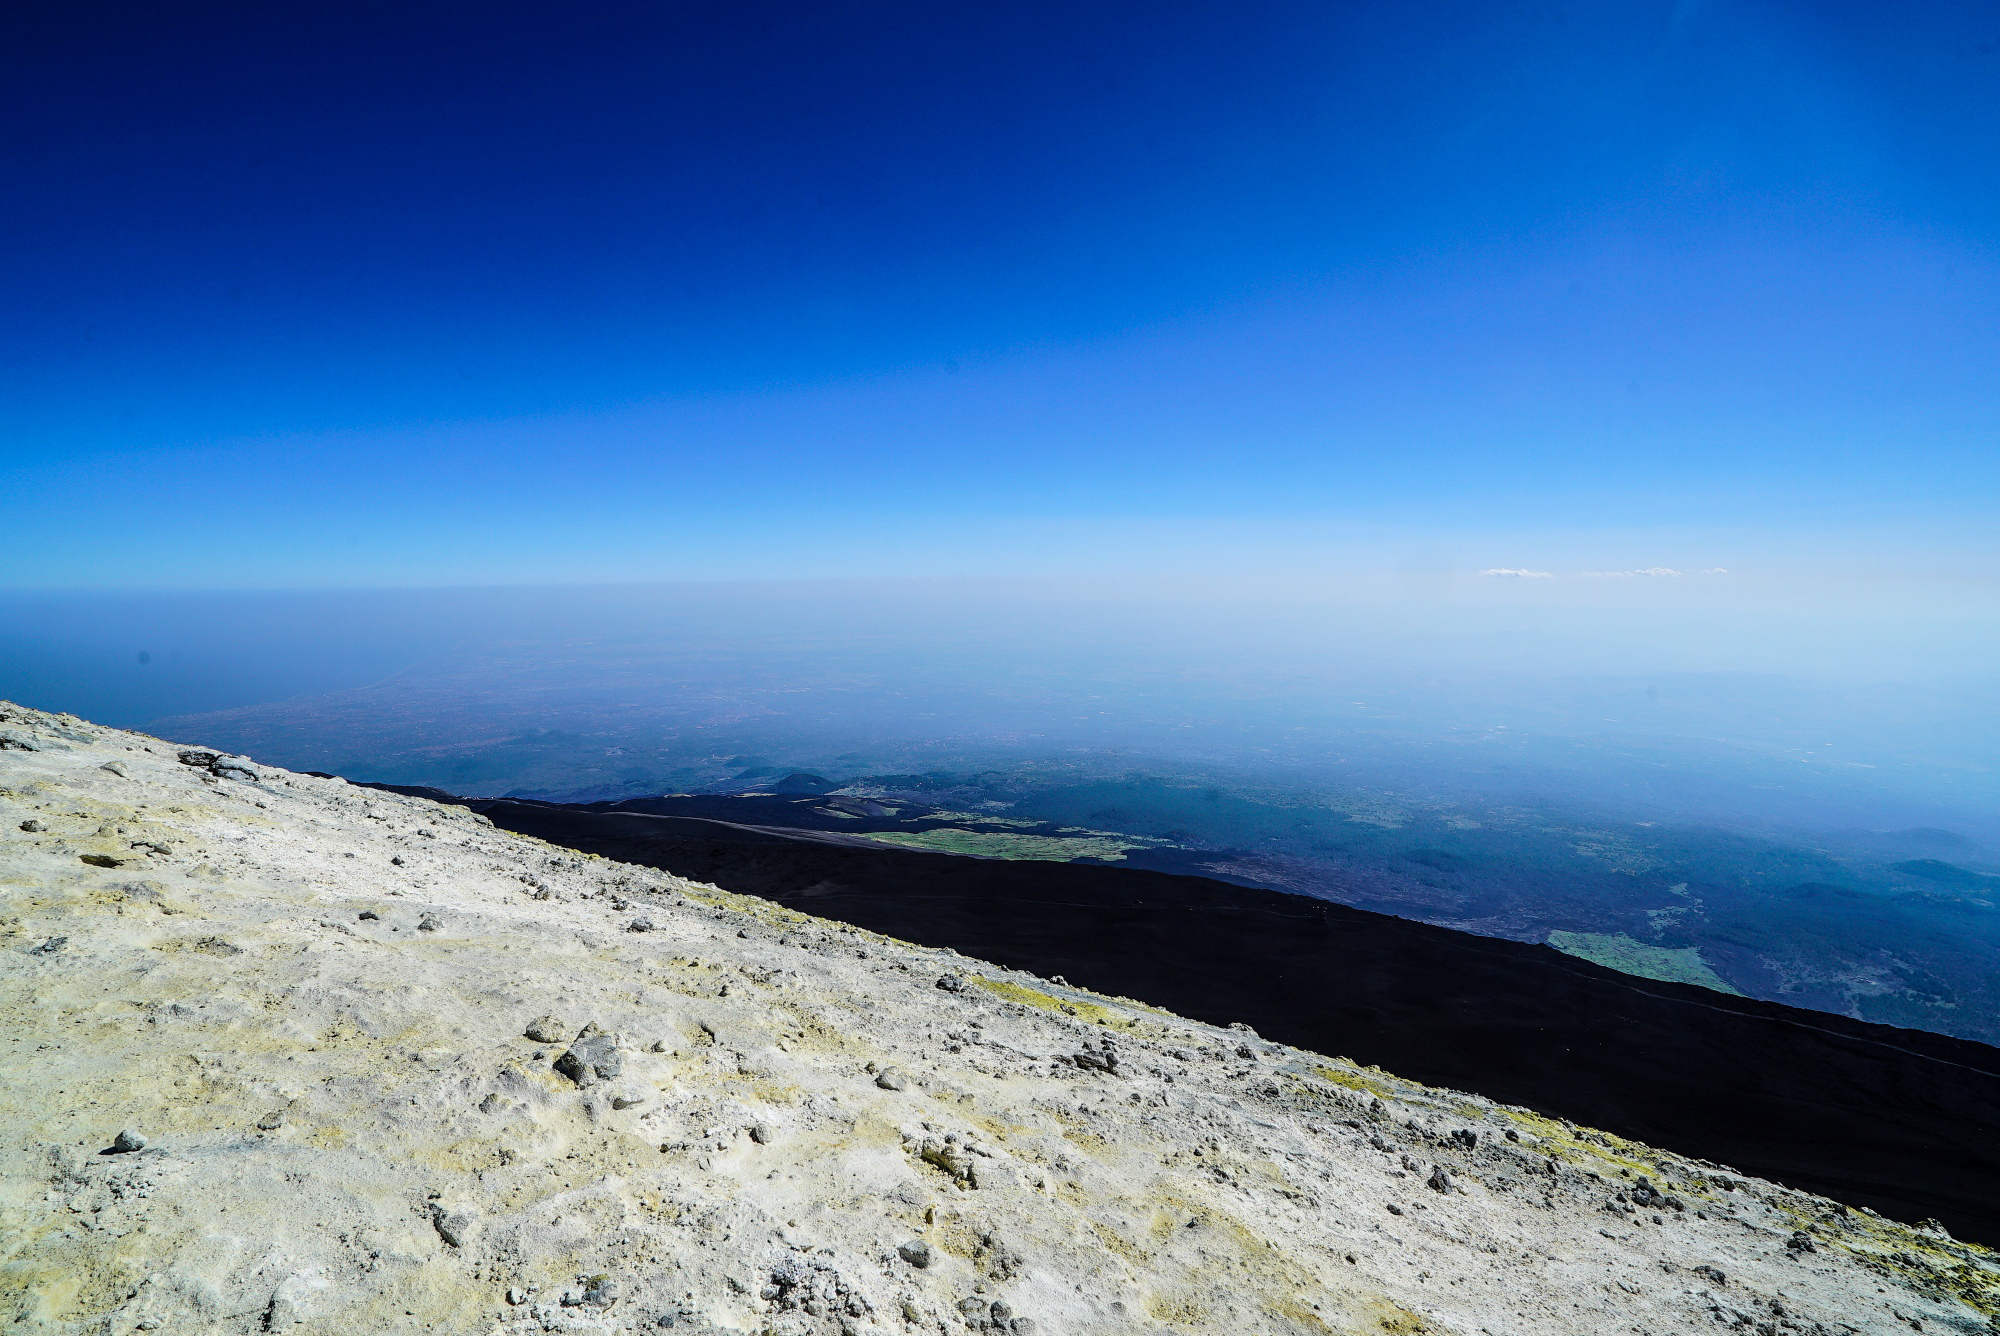 Der Ausblick vom Gipfel des Ätna.